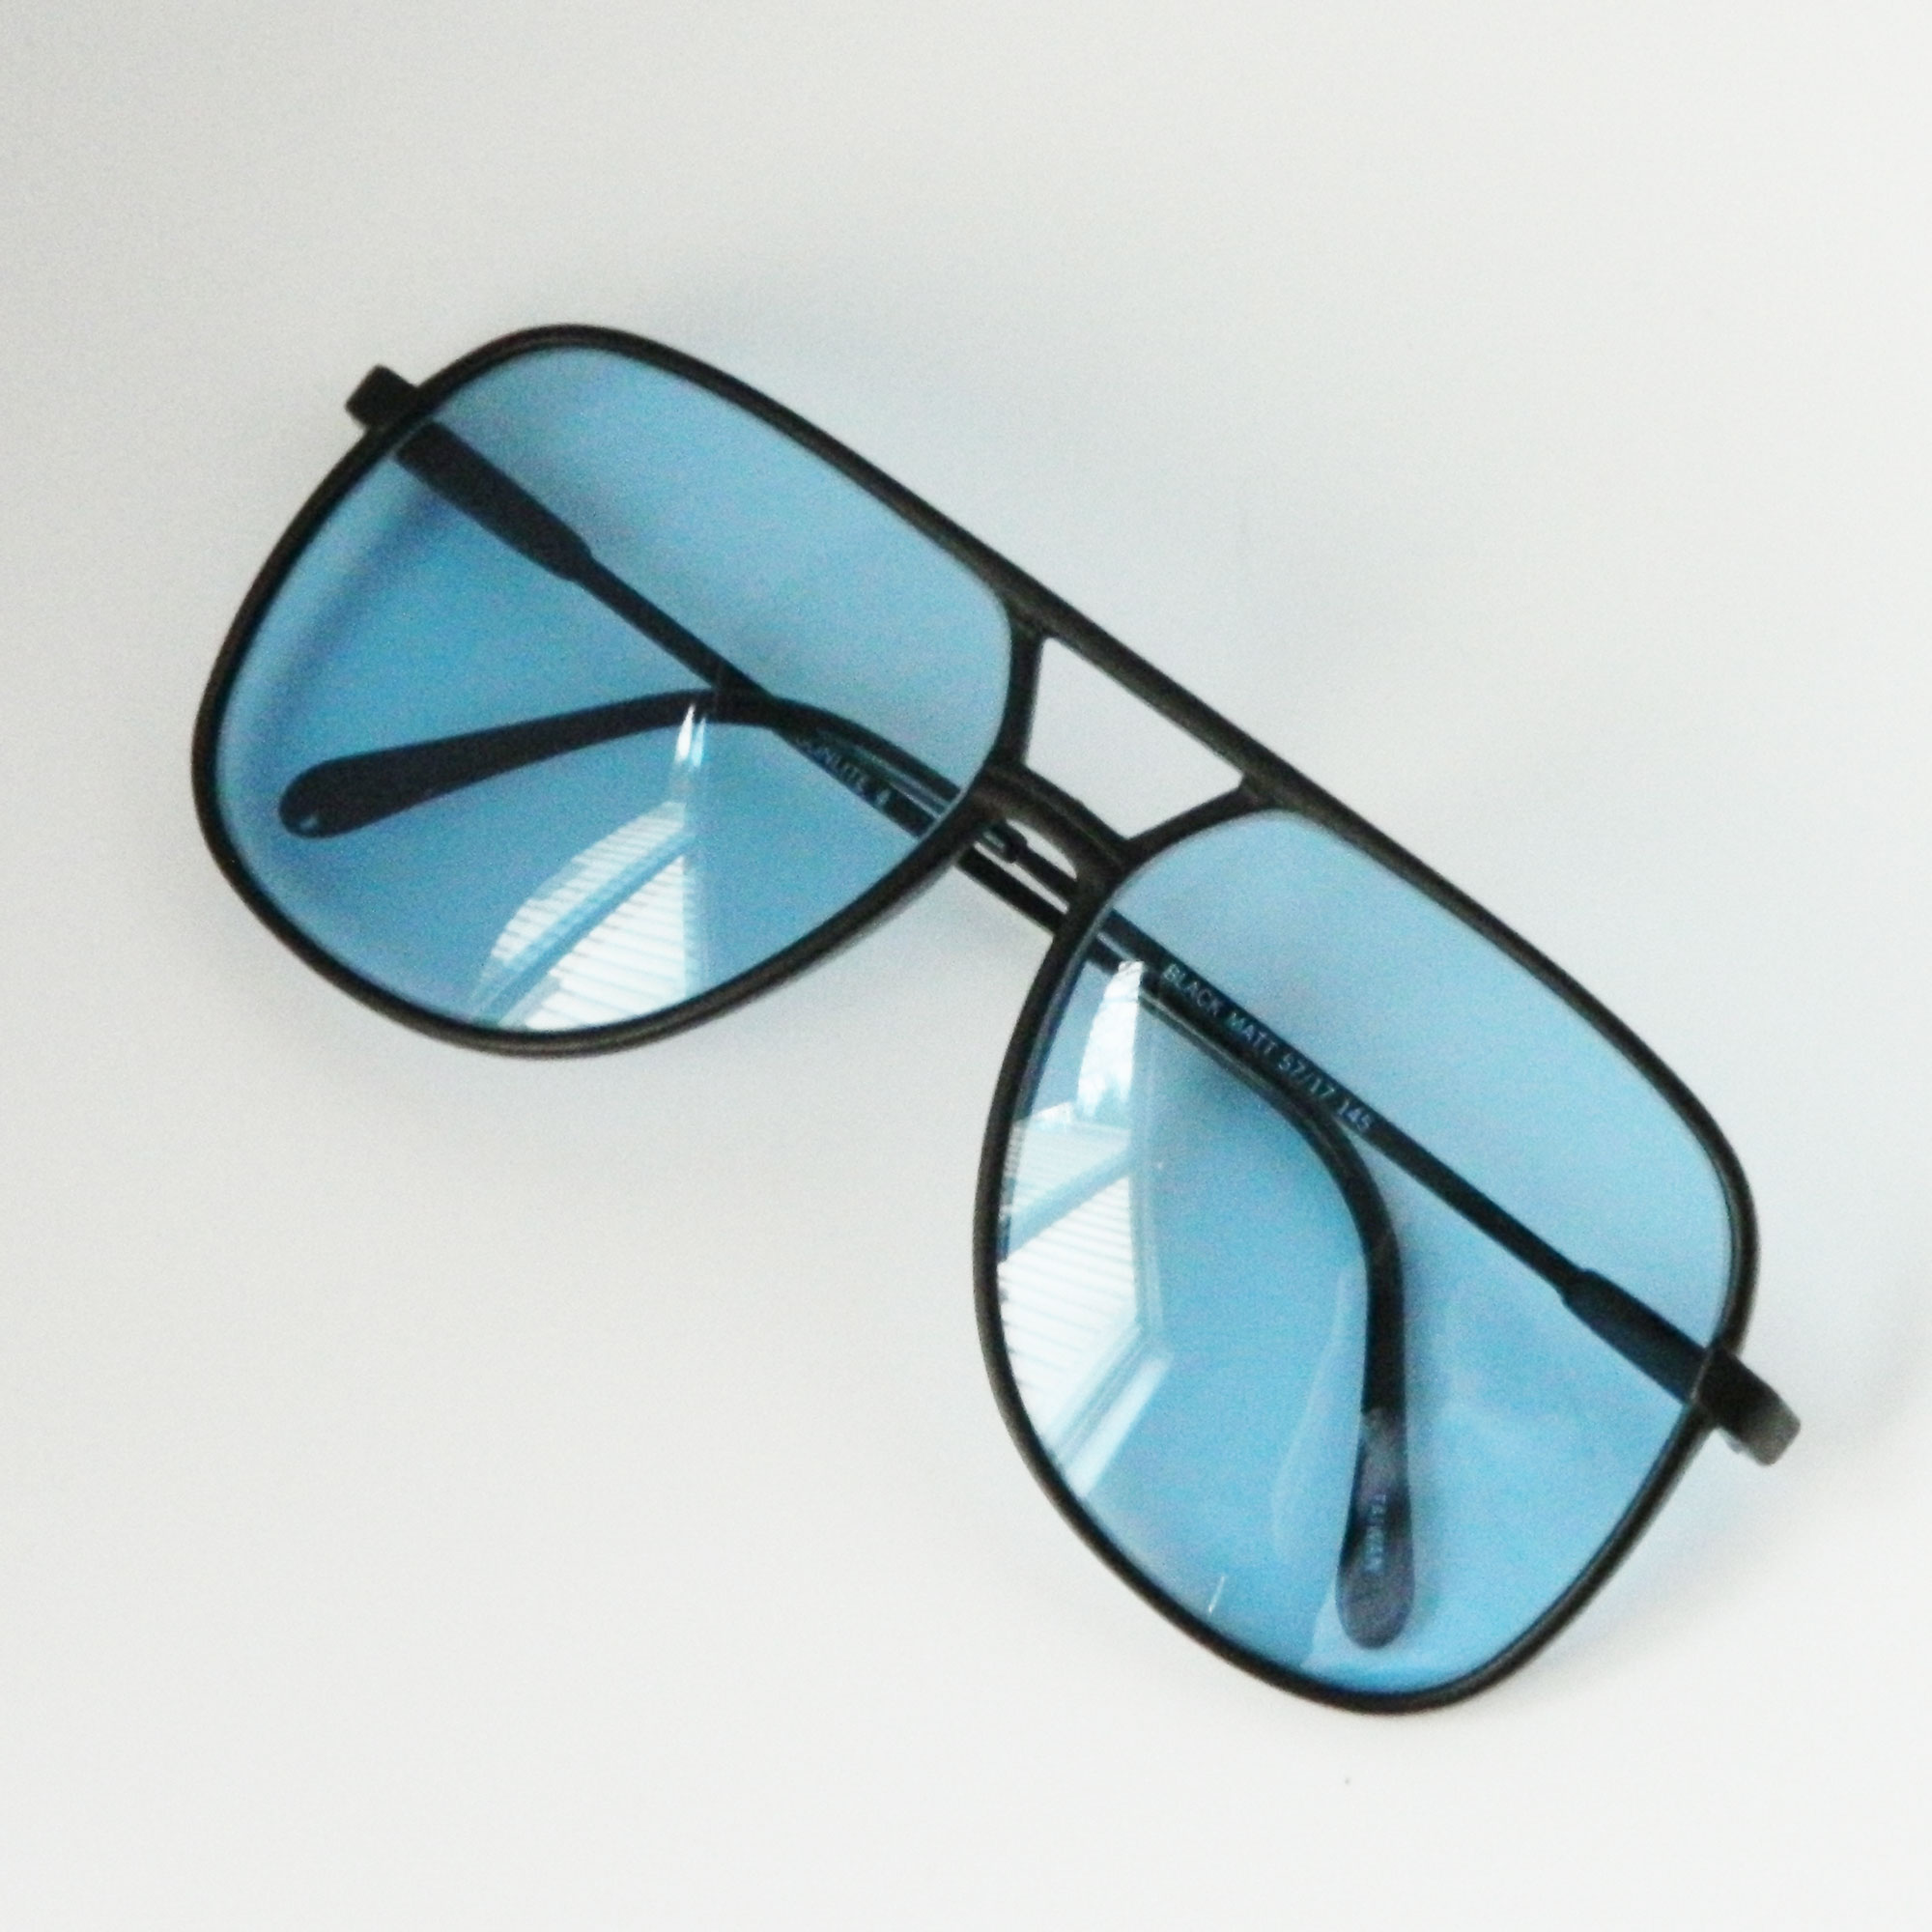 1980s blue aviator sunglasses